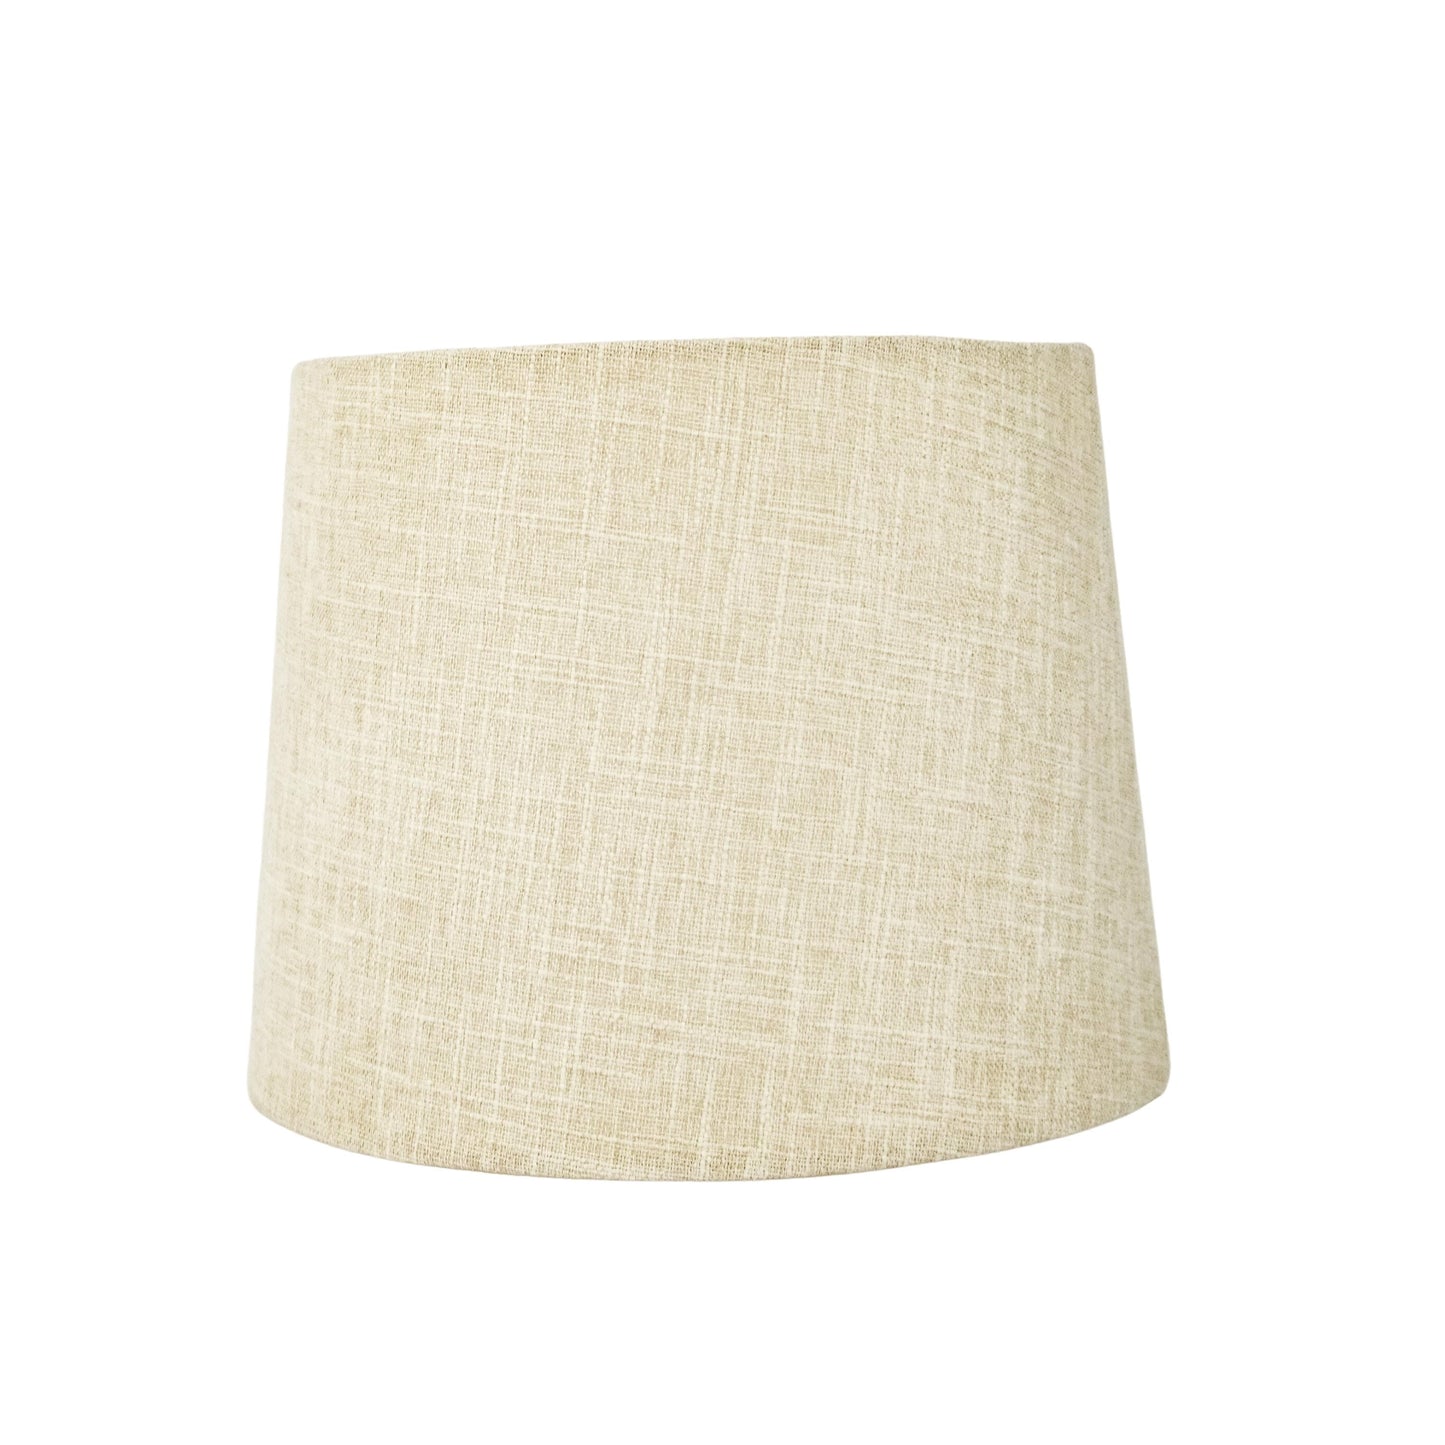 Basic Fabric Lamp Shade